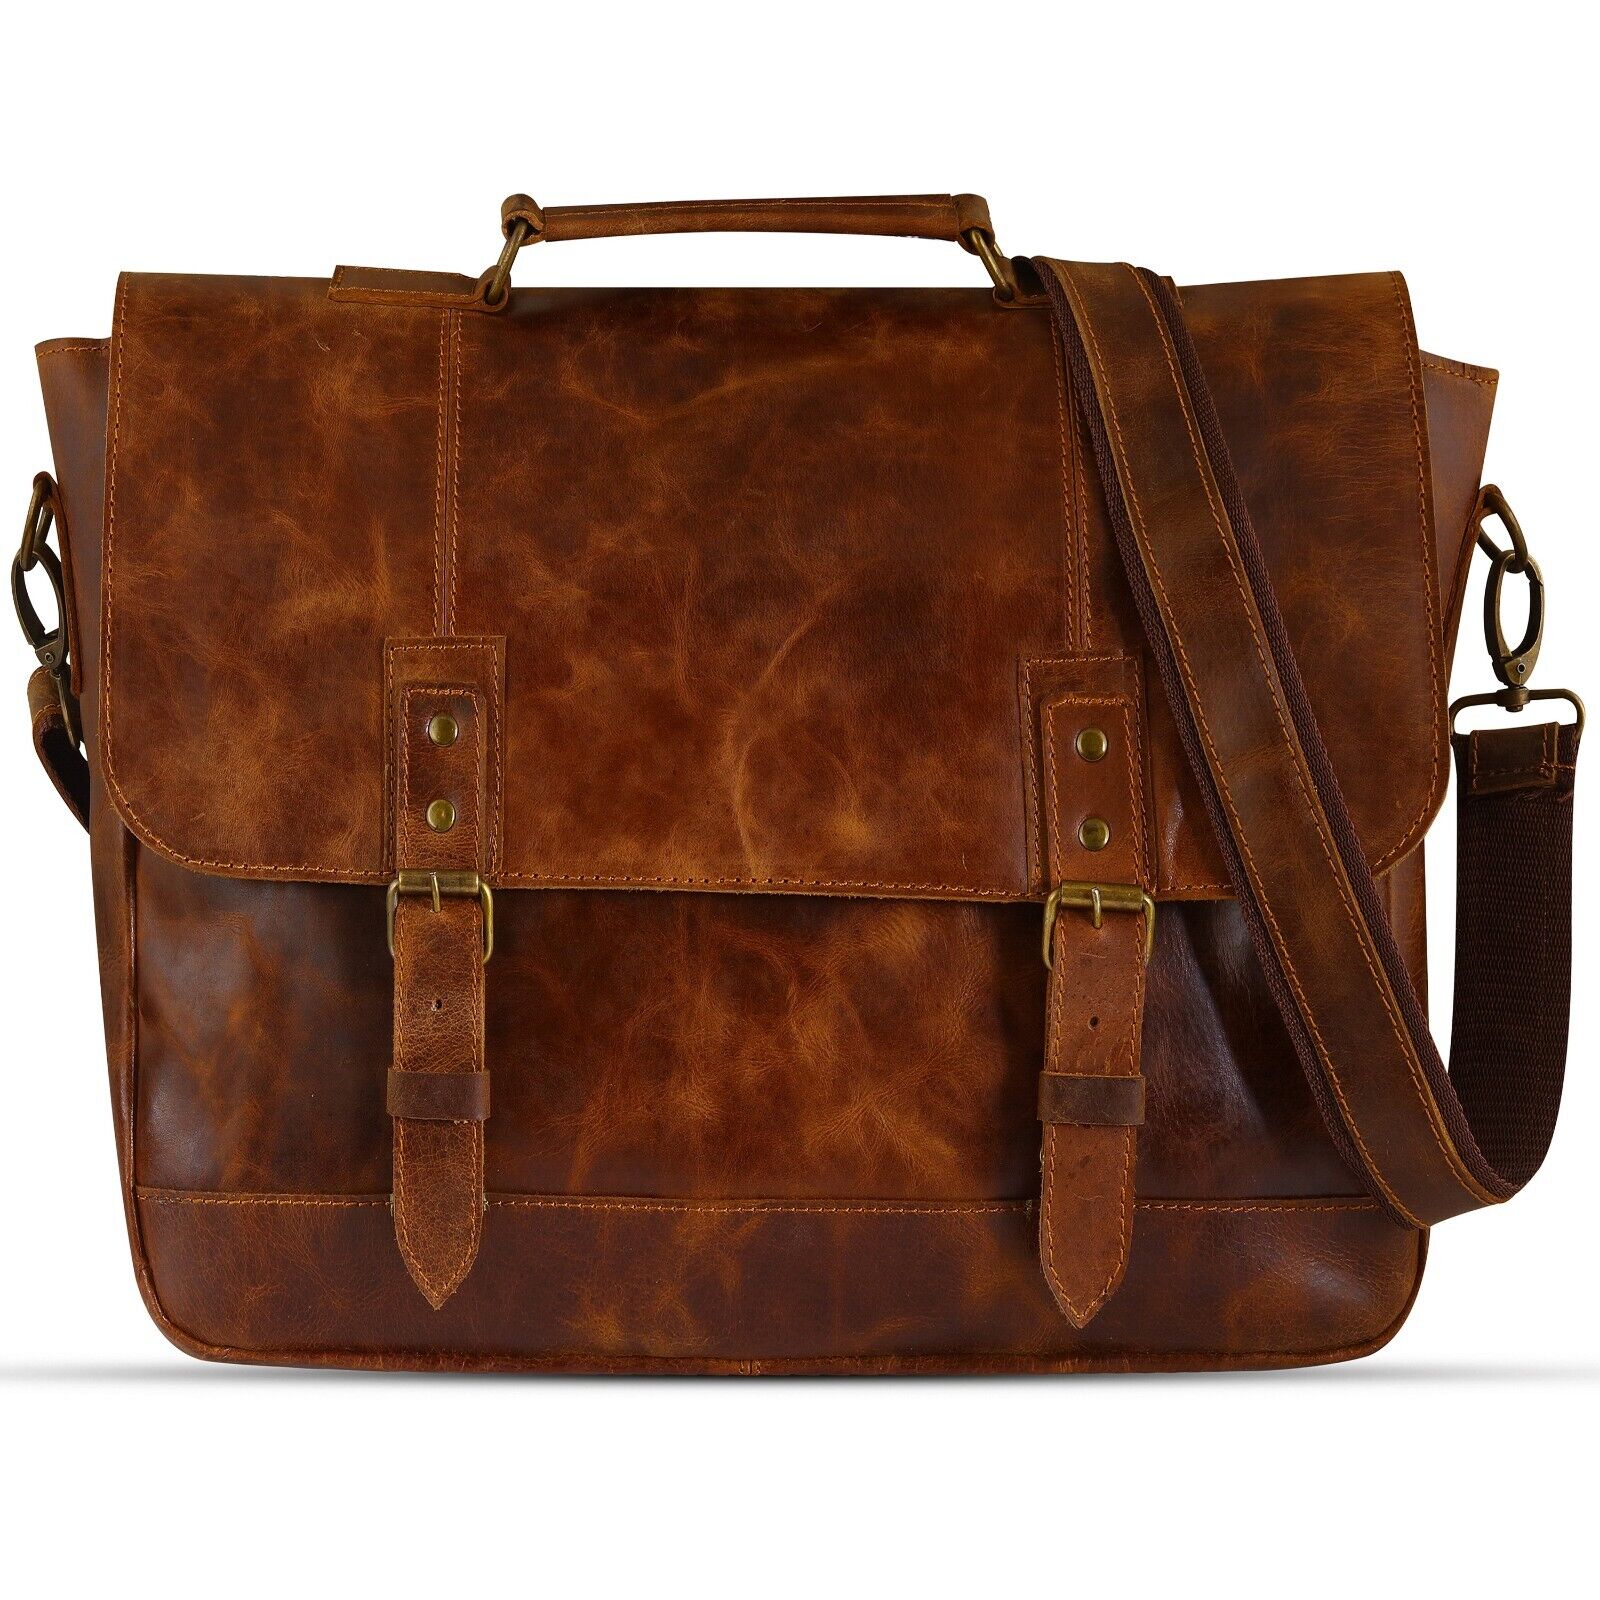 Leather laptop bag leather messenger bag leather briefcase crossbody bag